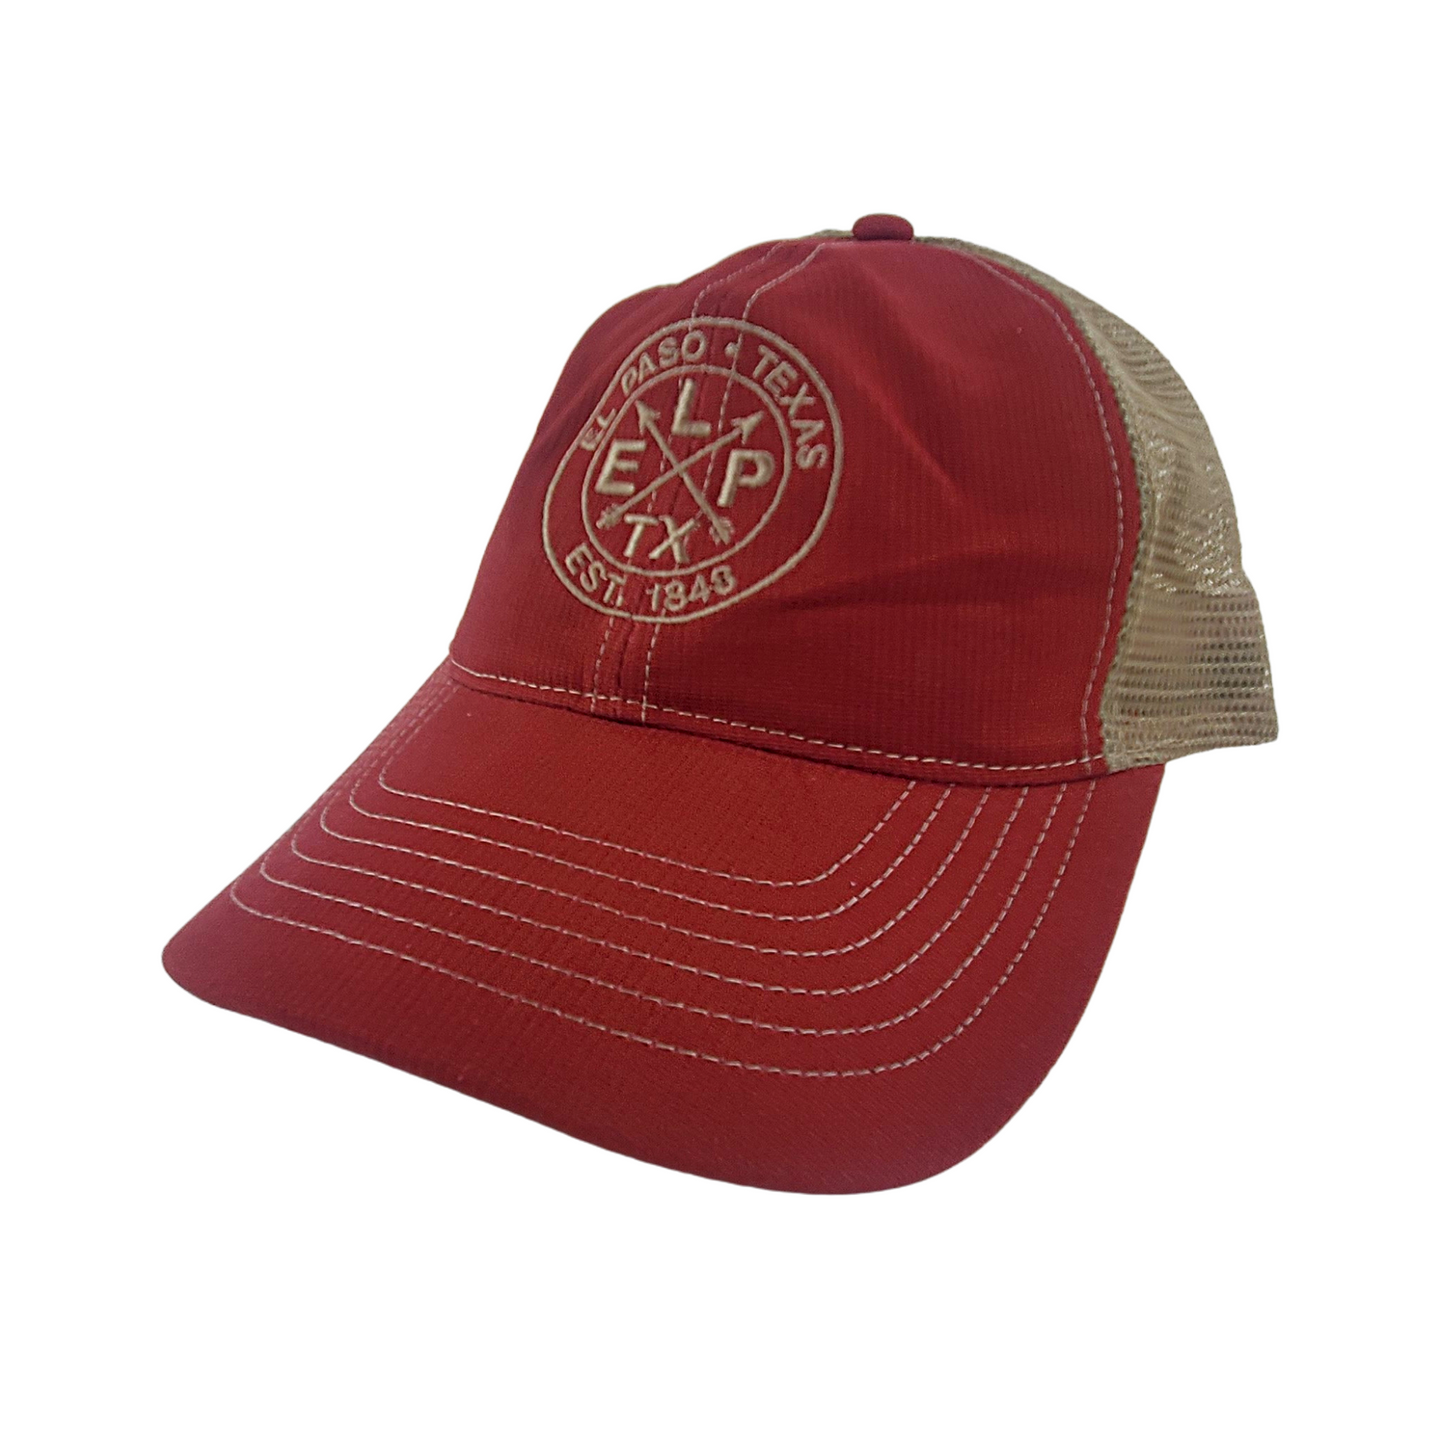 Hat - Red with Arrows and Brown Mesh-Apparel-So El Paso